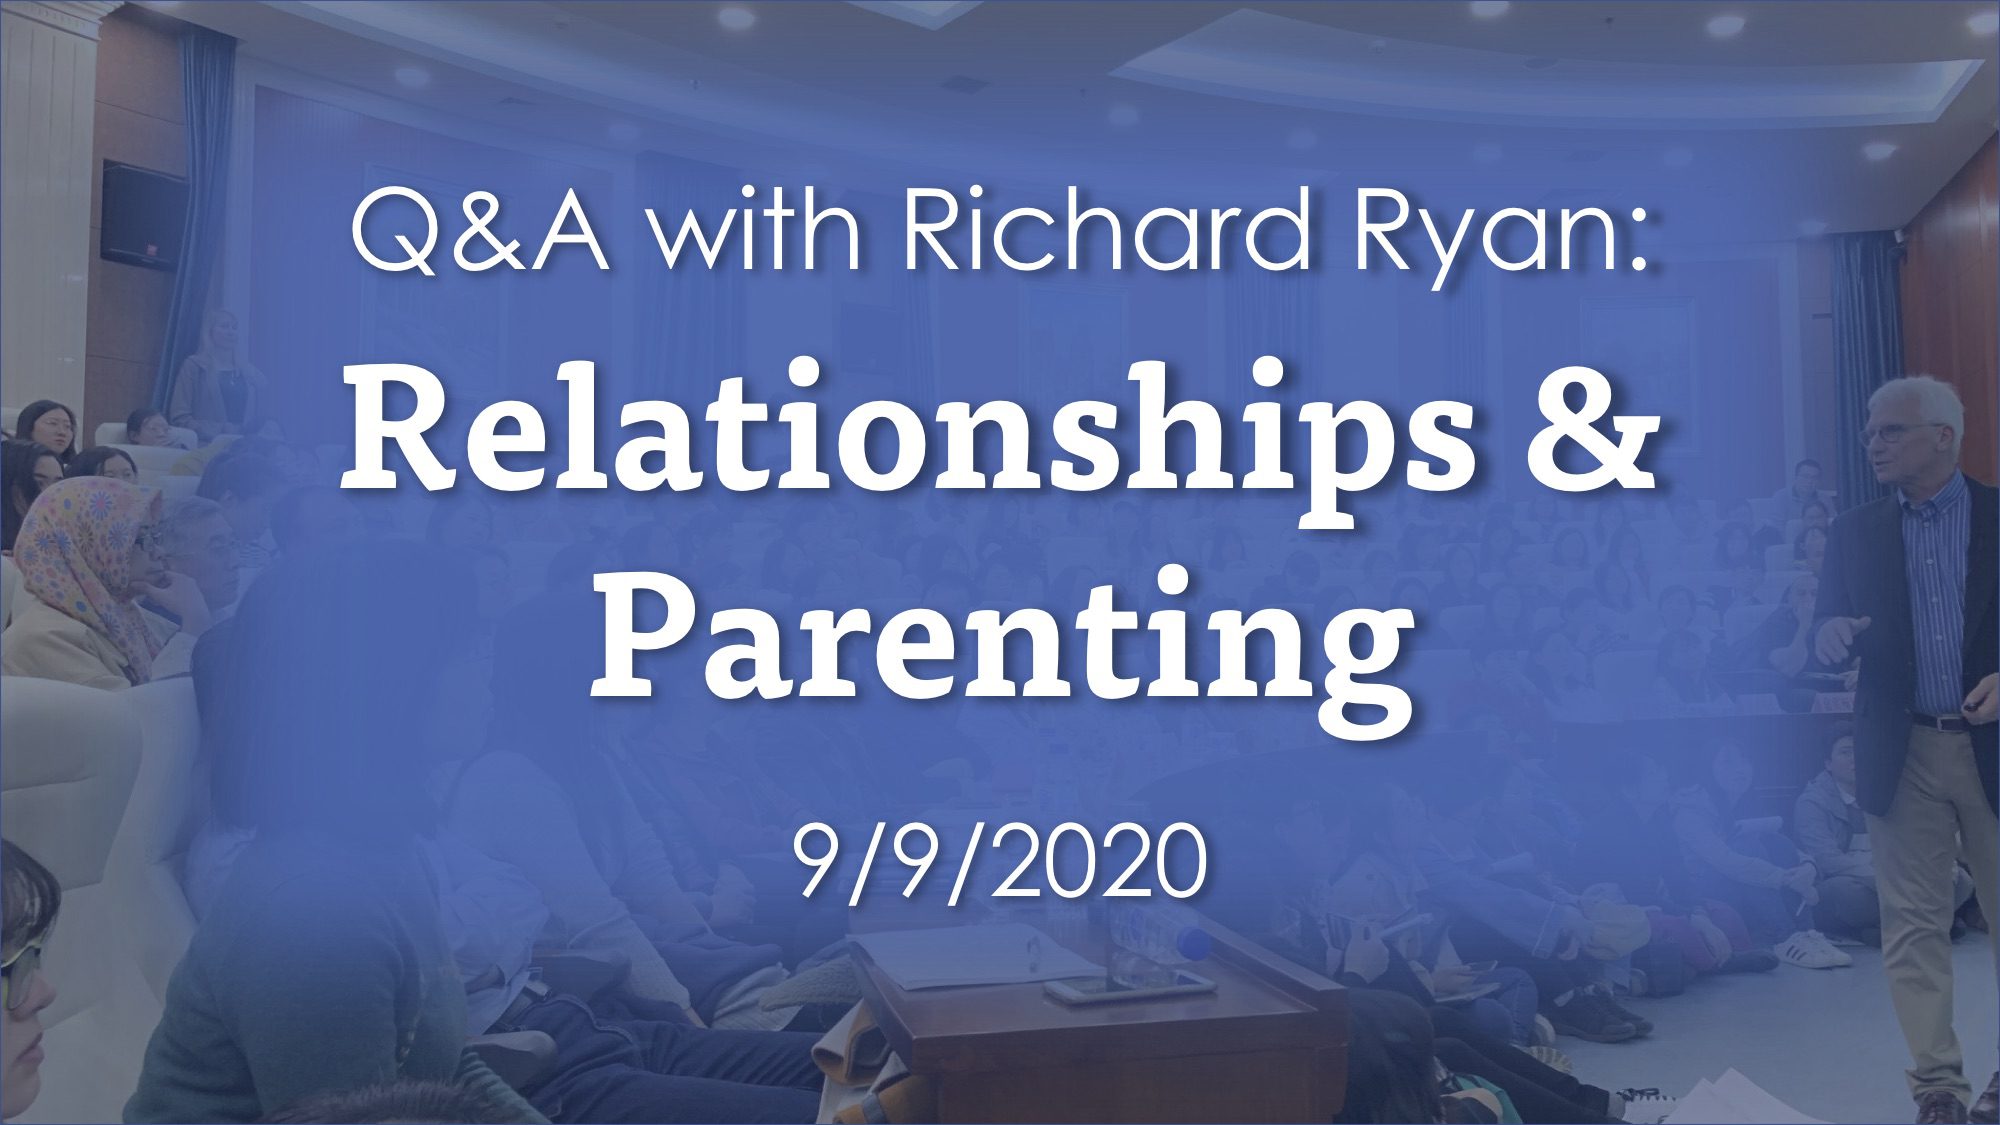 QA with Richard Ryan Relationships  Parenting 992020